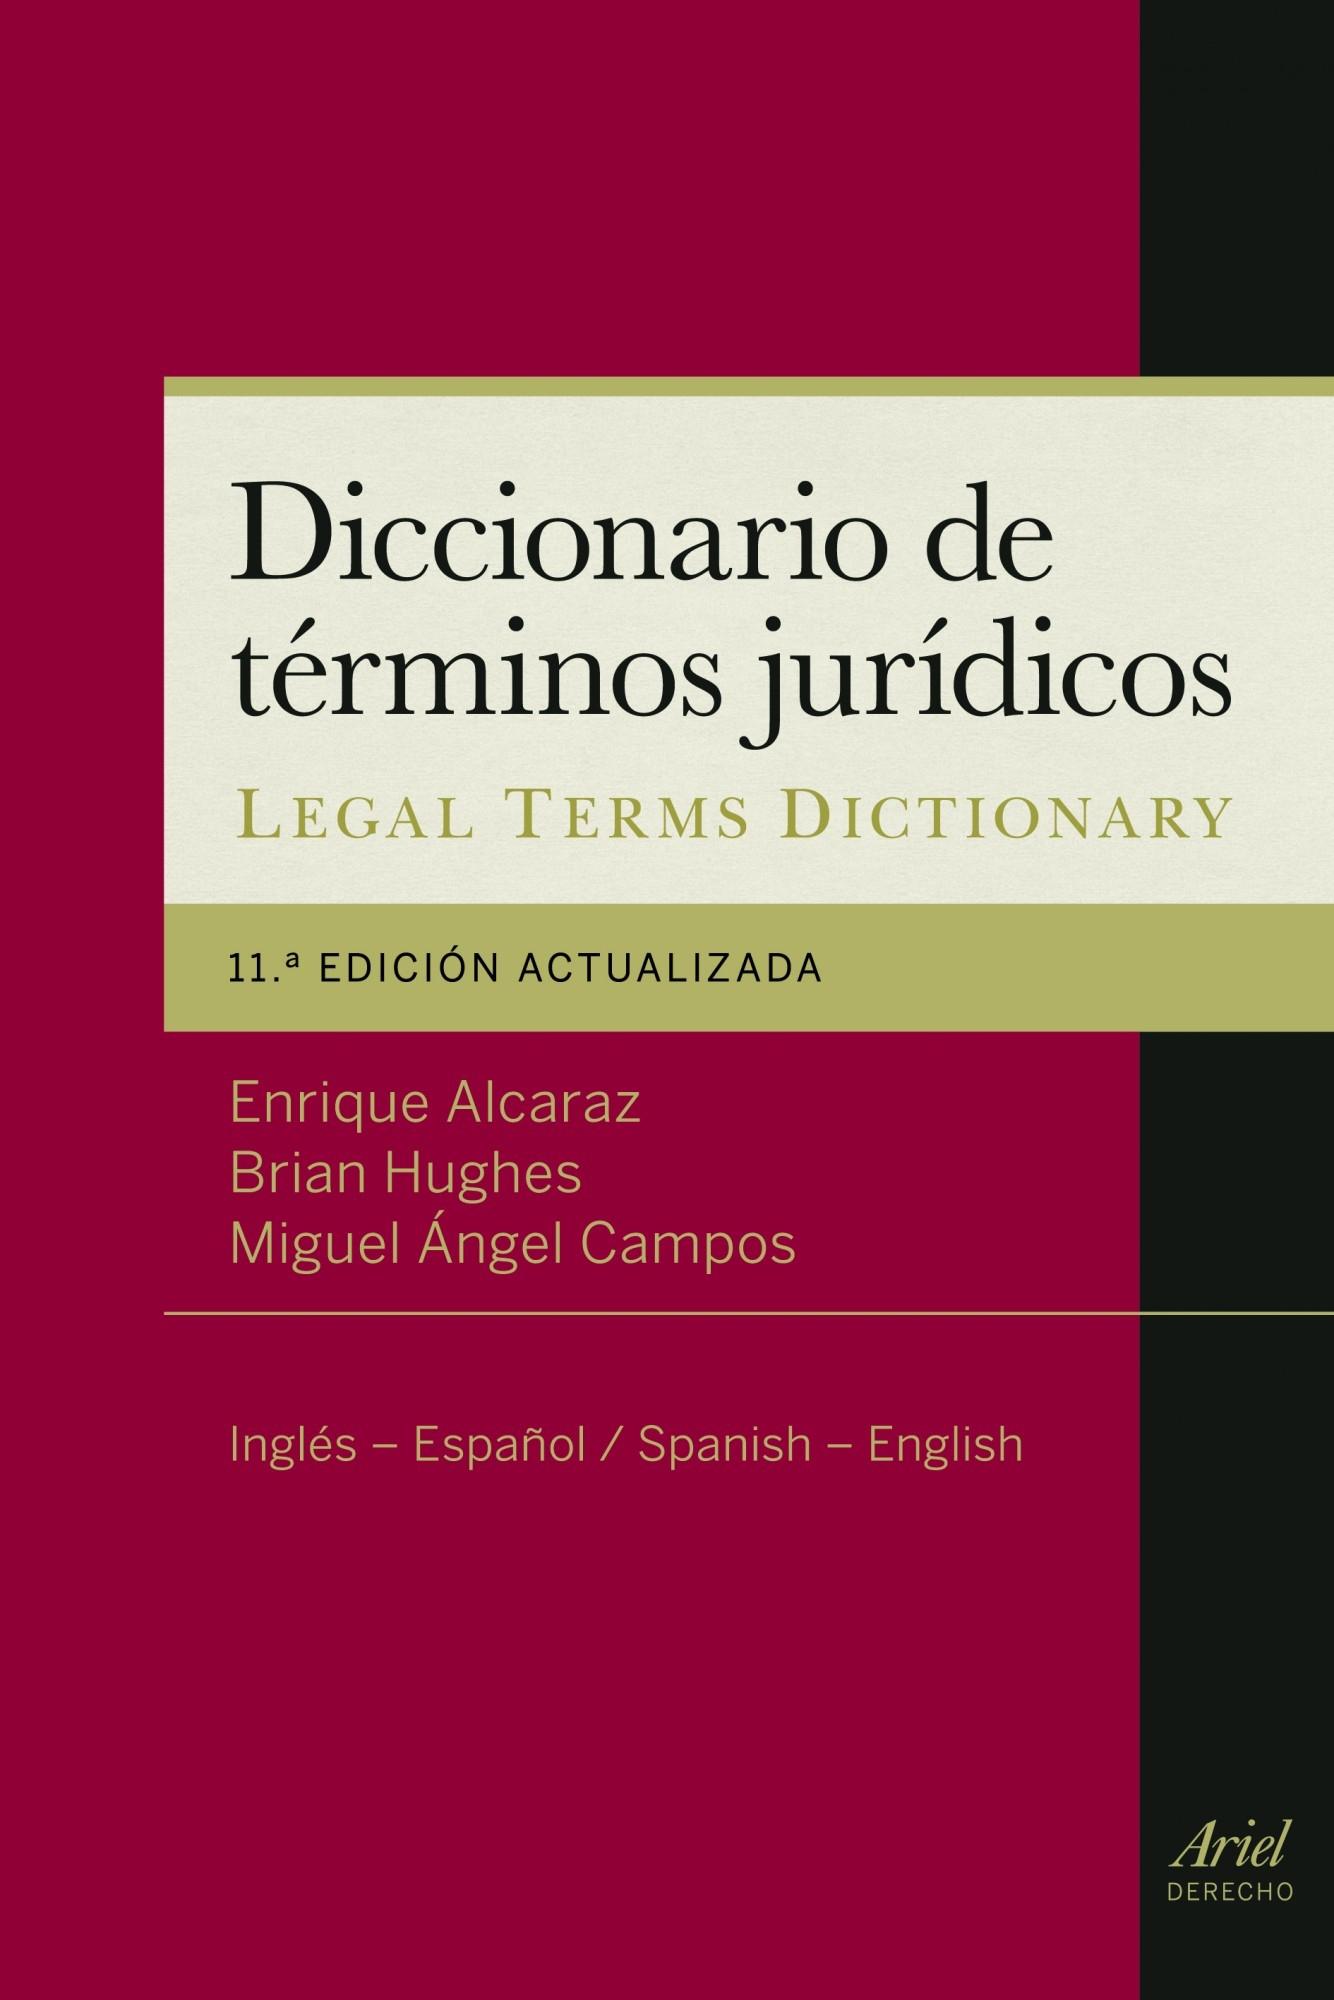 DICCIONARIO DE TÉRMINOS JURÍDICOS "A Dictionary of Legal Terms. Inglés-Español / Spanish-English"